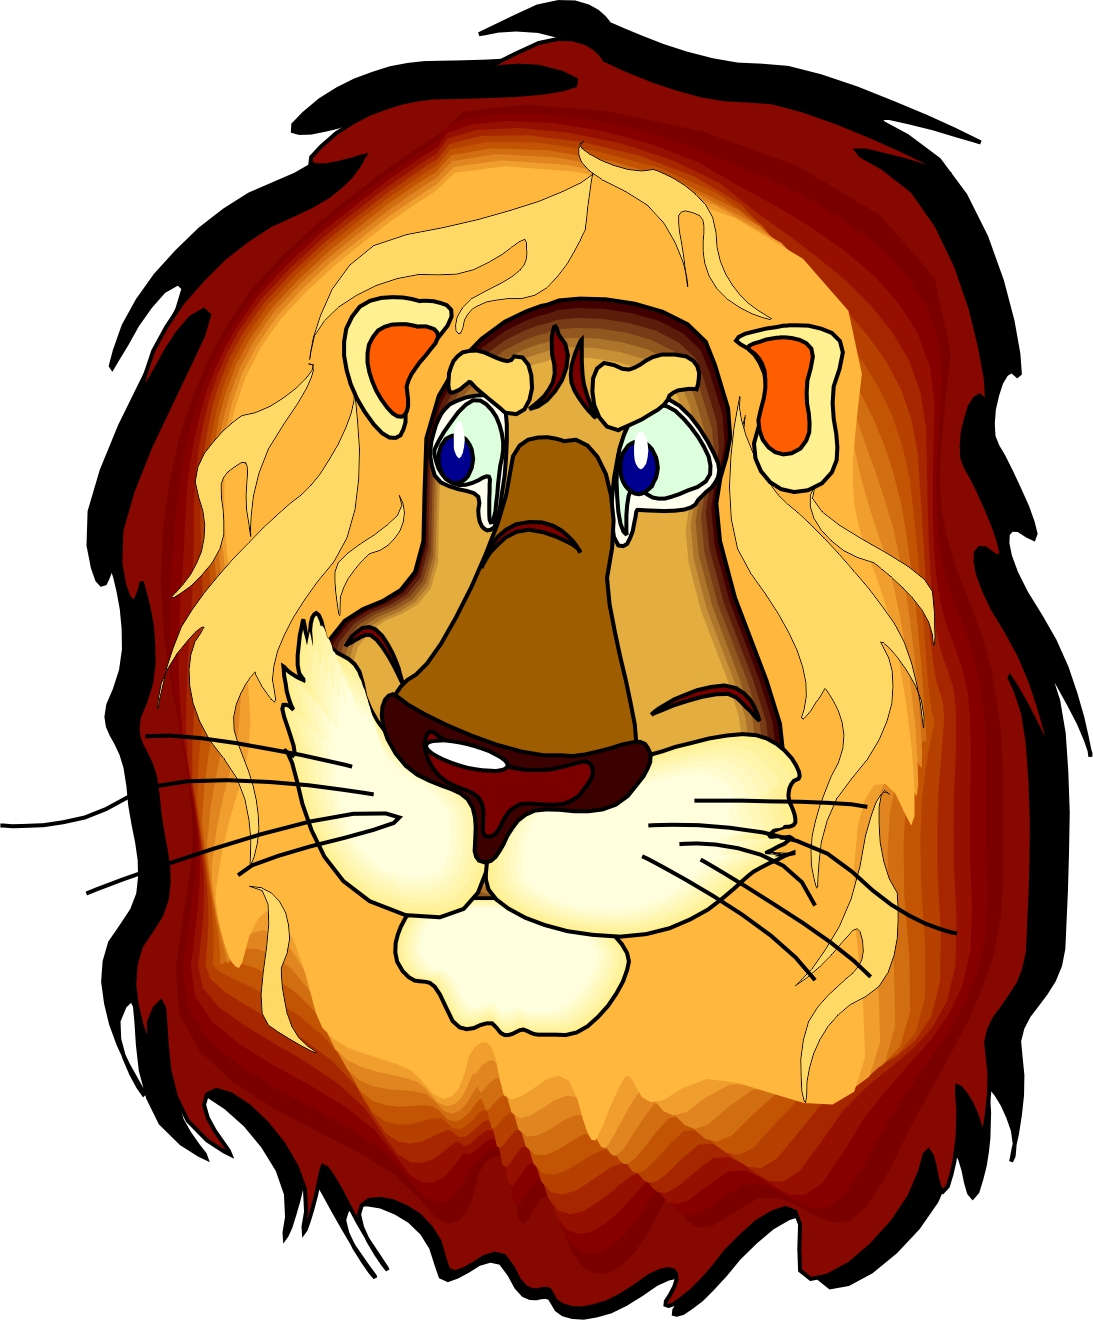 Lion Head Cartoon - Cartoon Lion Head Mascot Royalty Free Vector Image ...